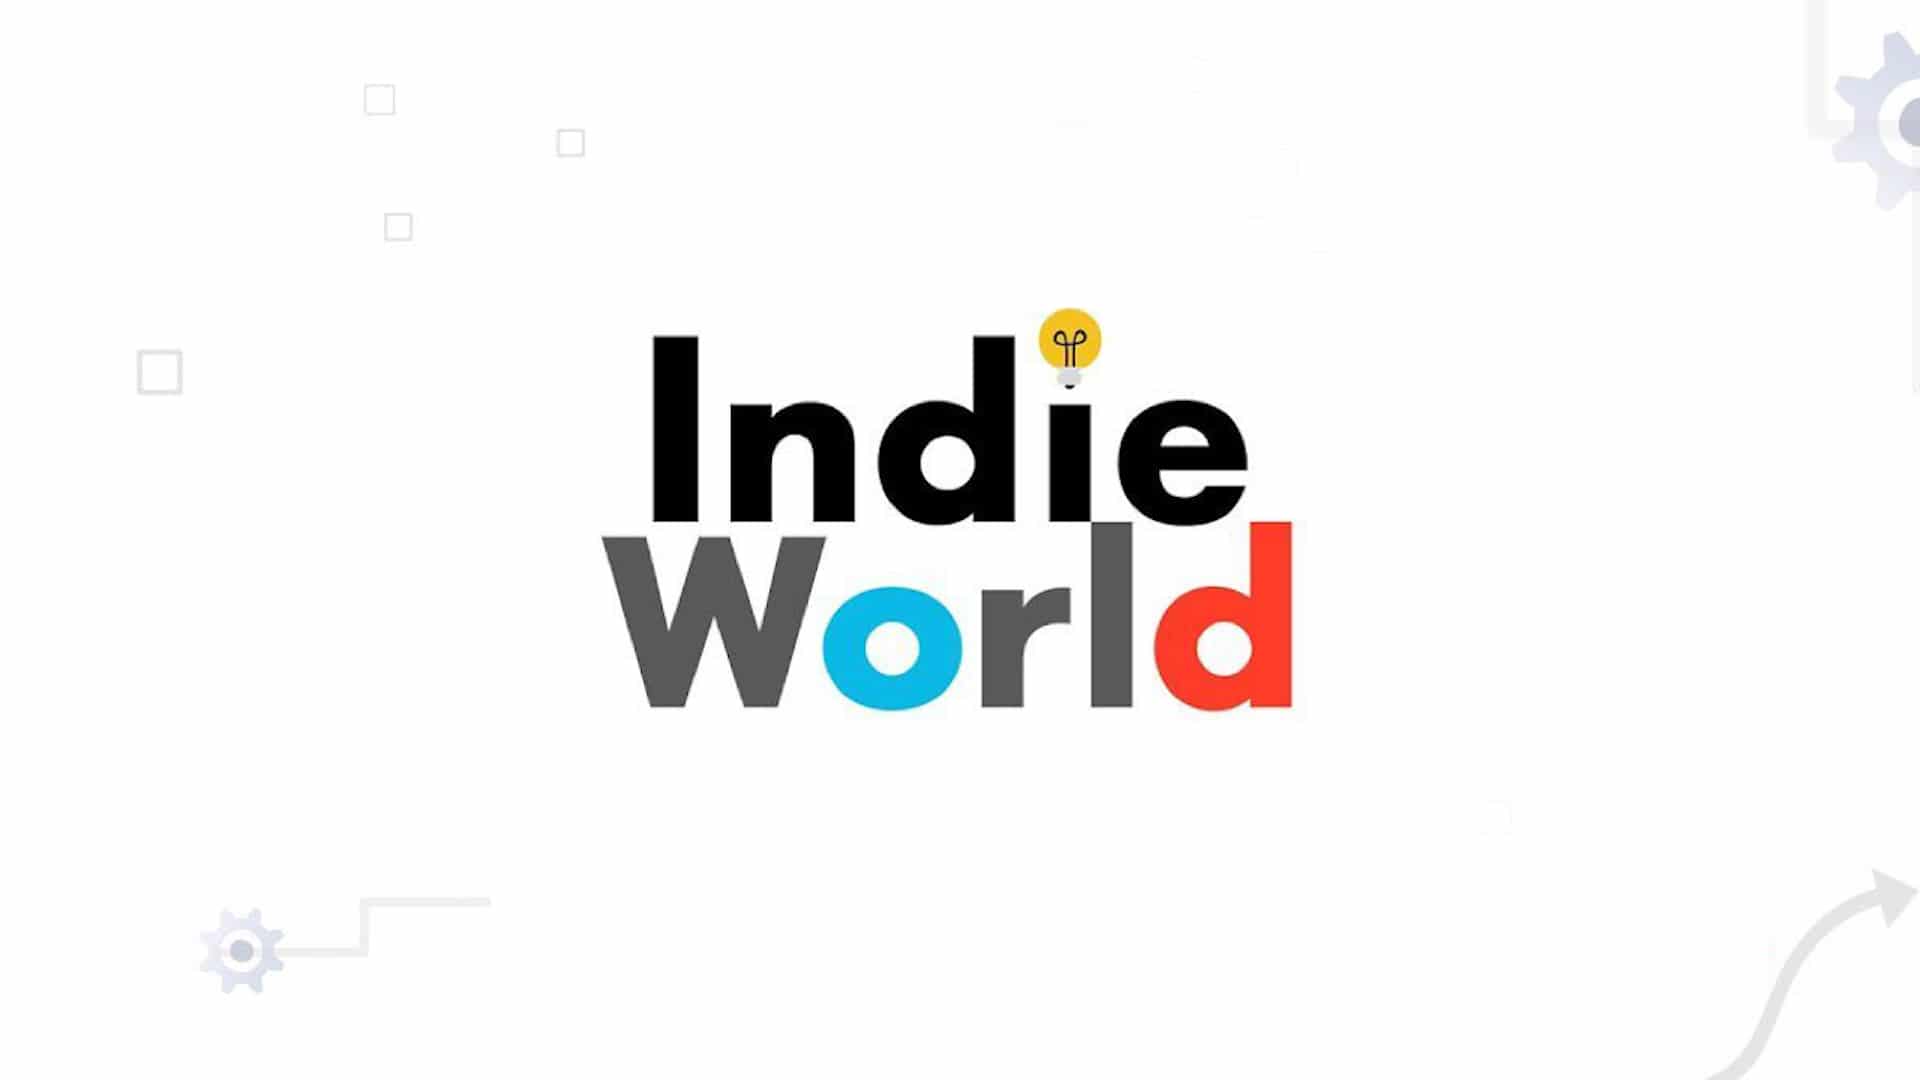 Nintendo Indie World Showcase Announced for November 9